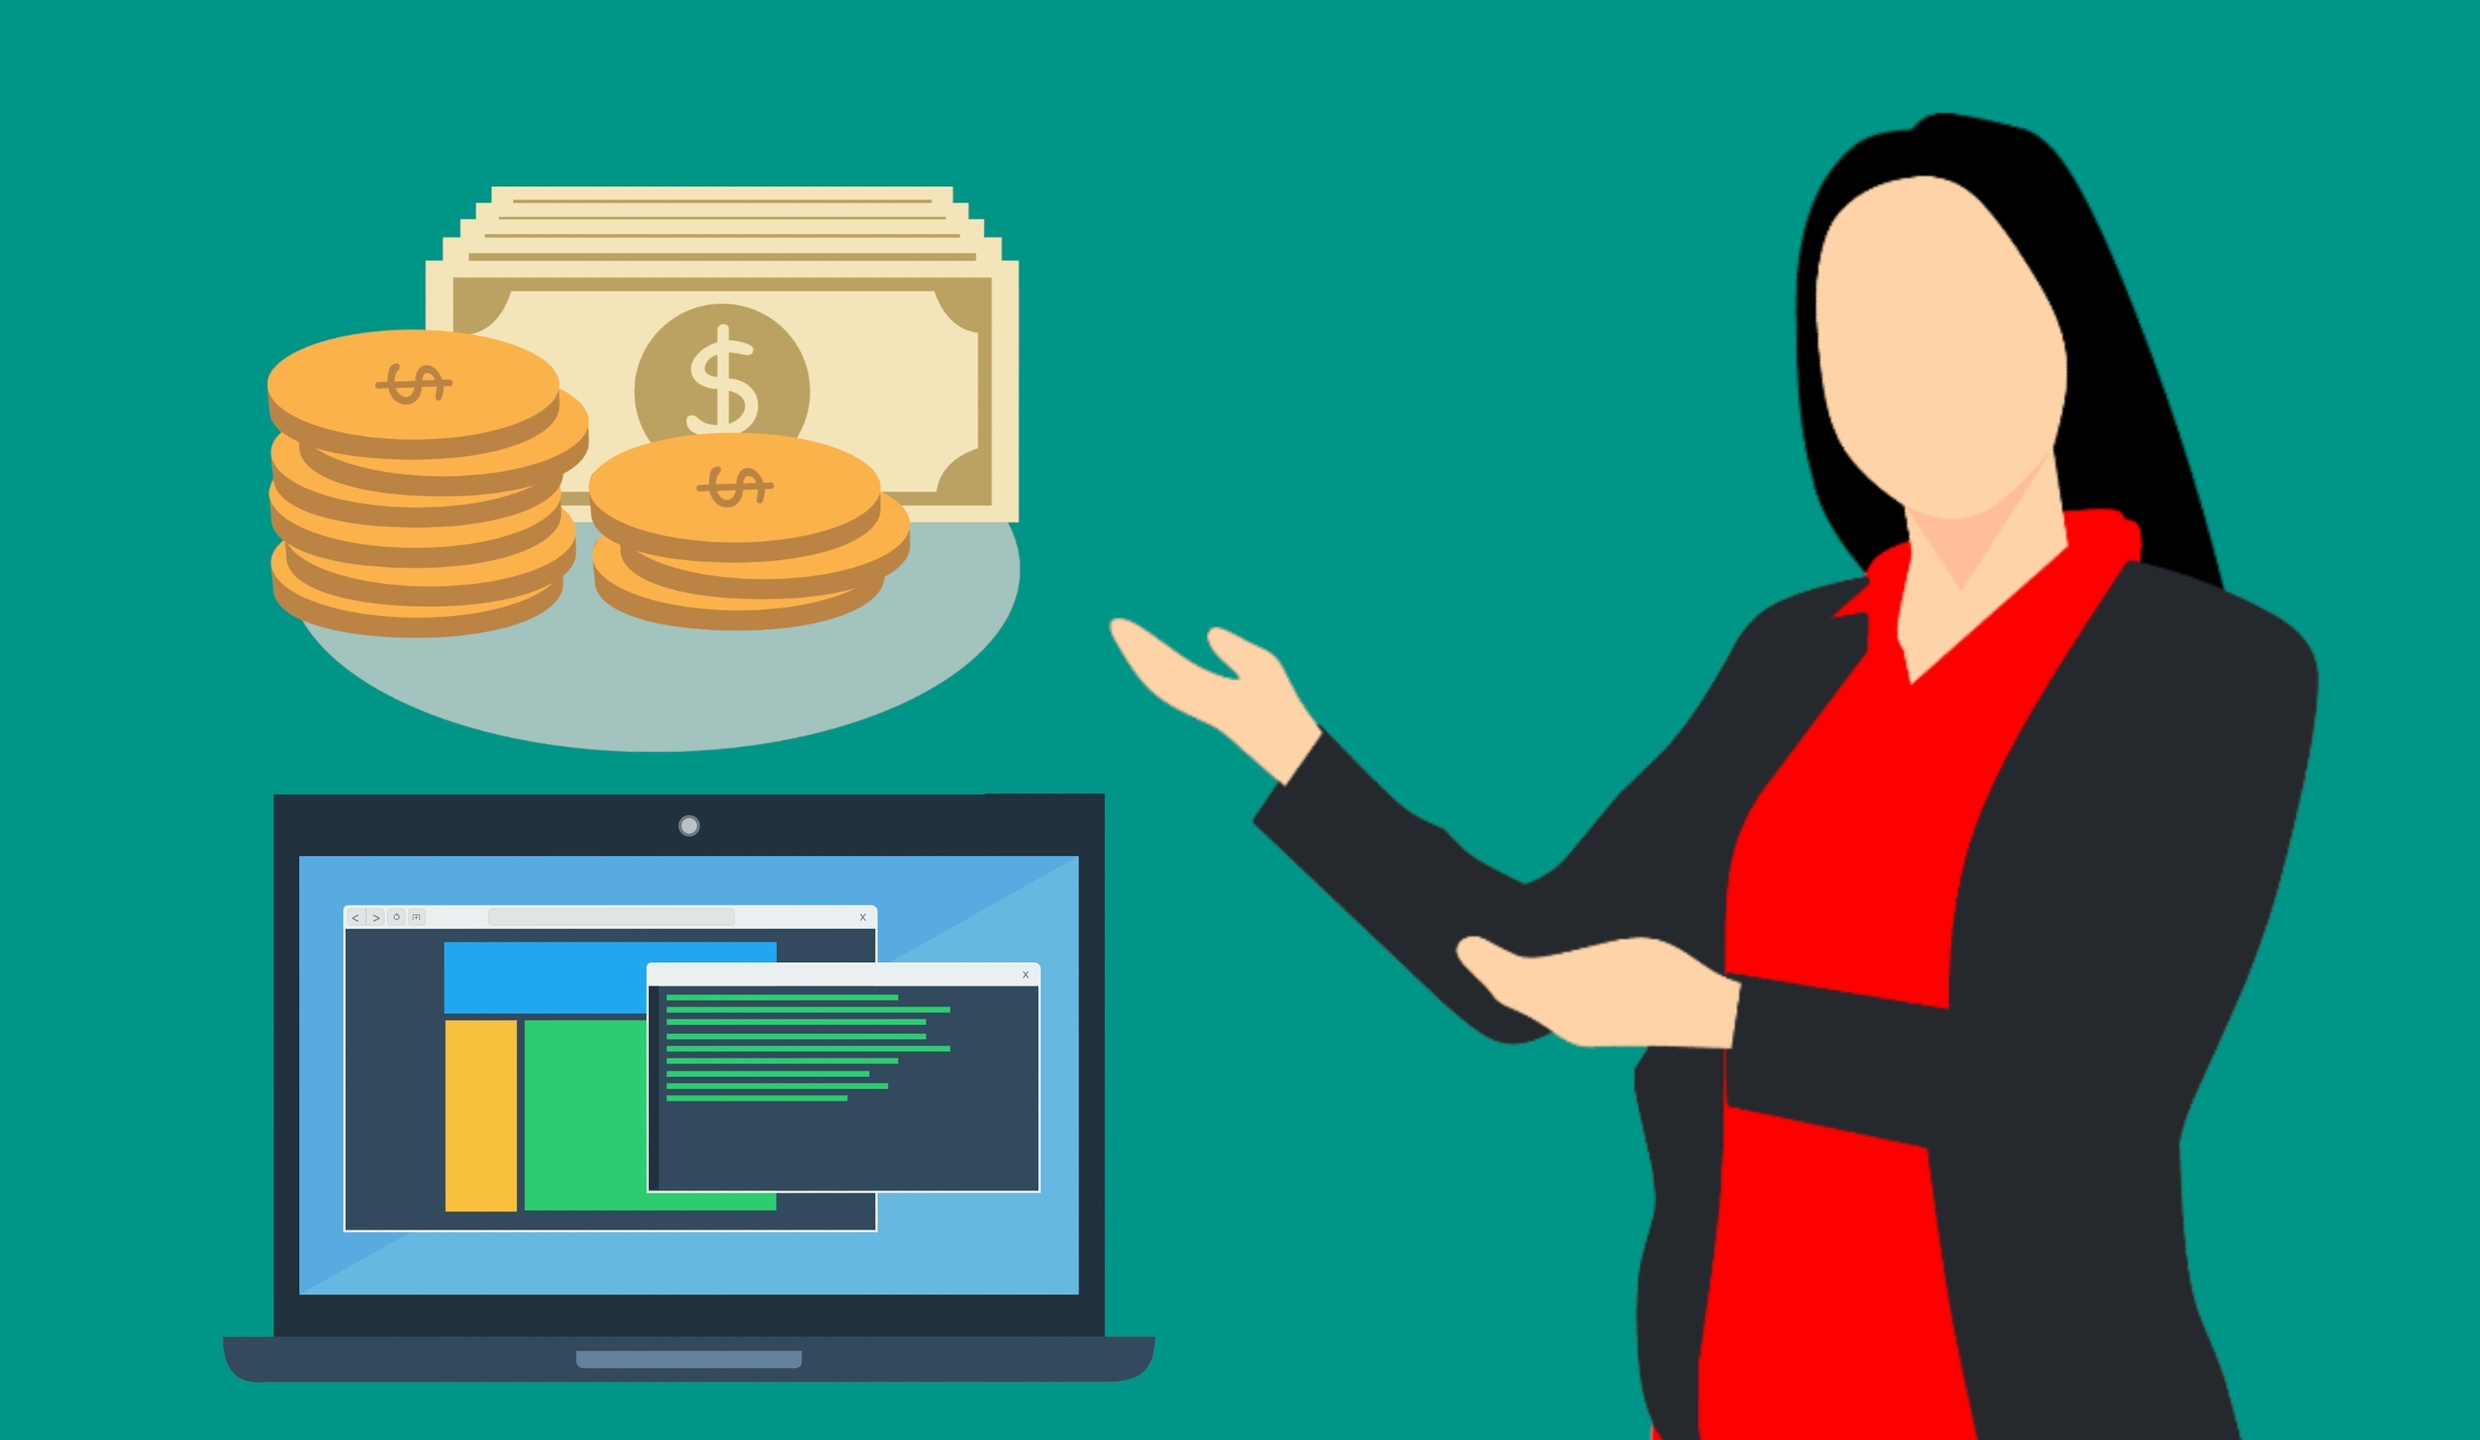 earn-laptop-money-online-woman-presenting-1437787-pxhere.com_